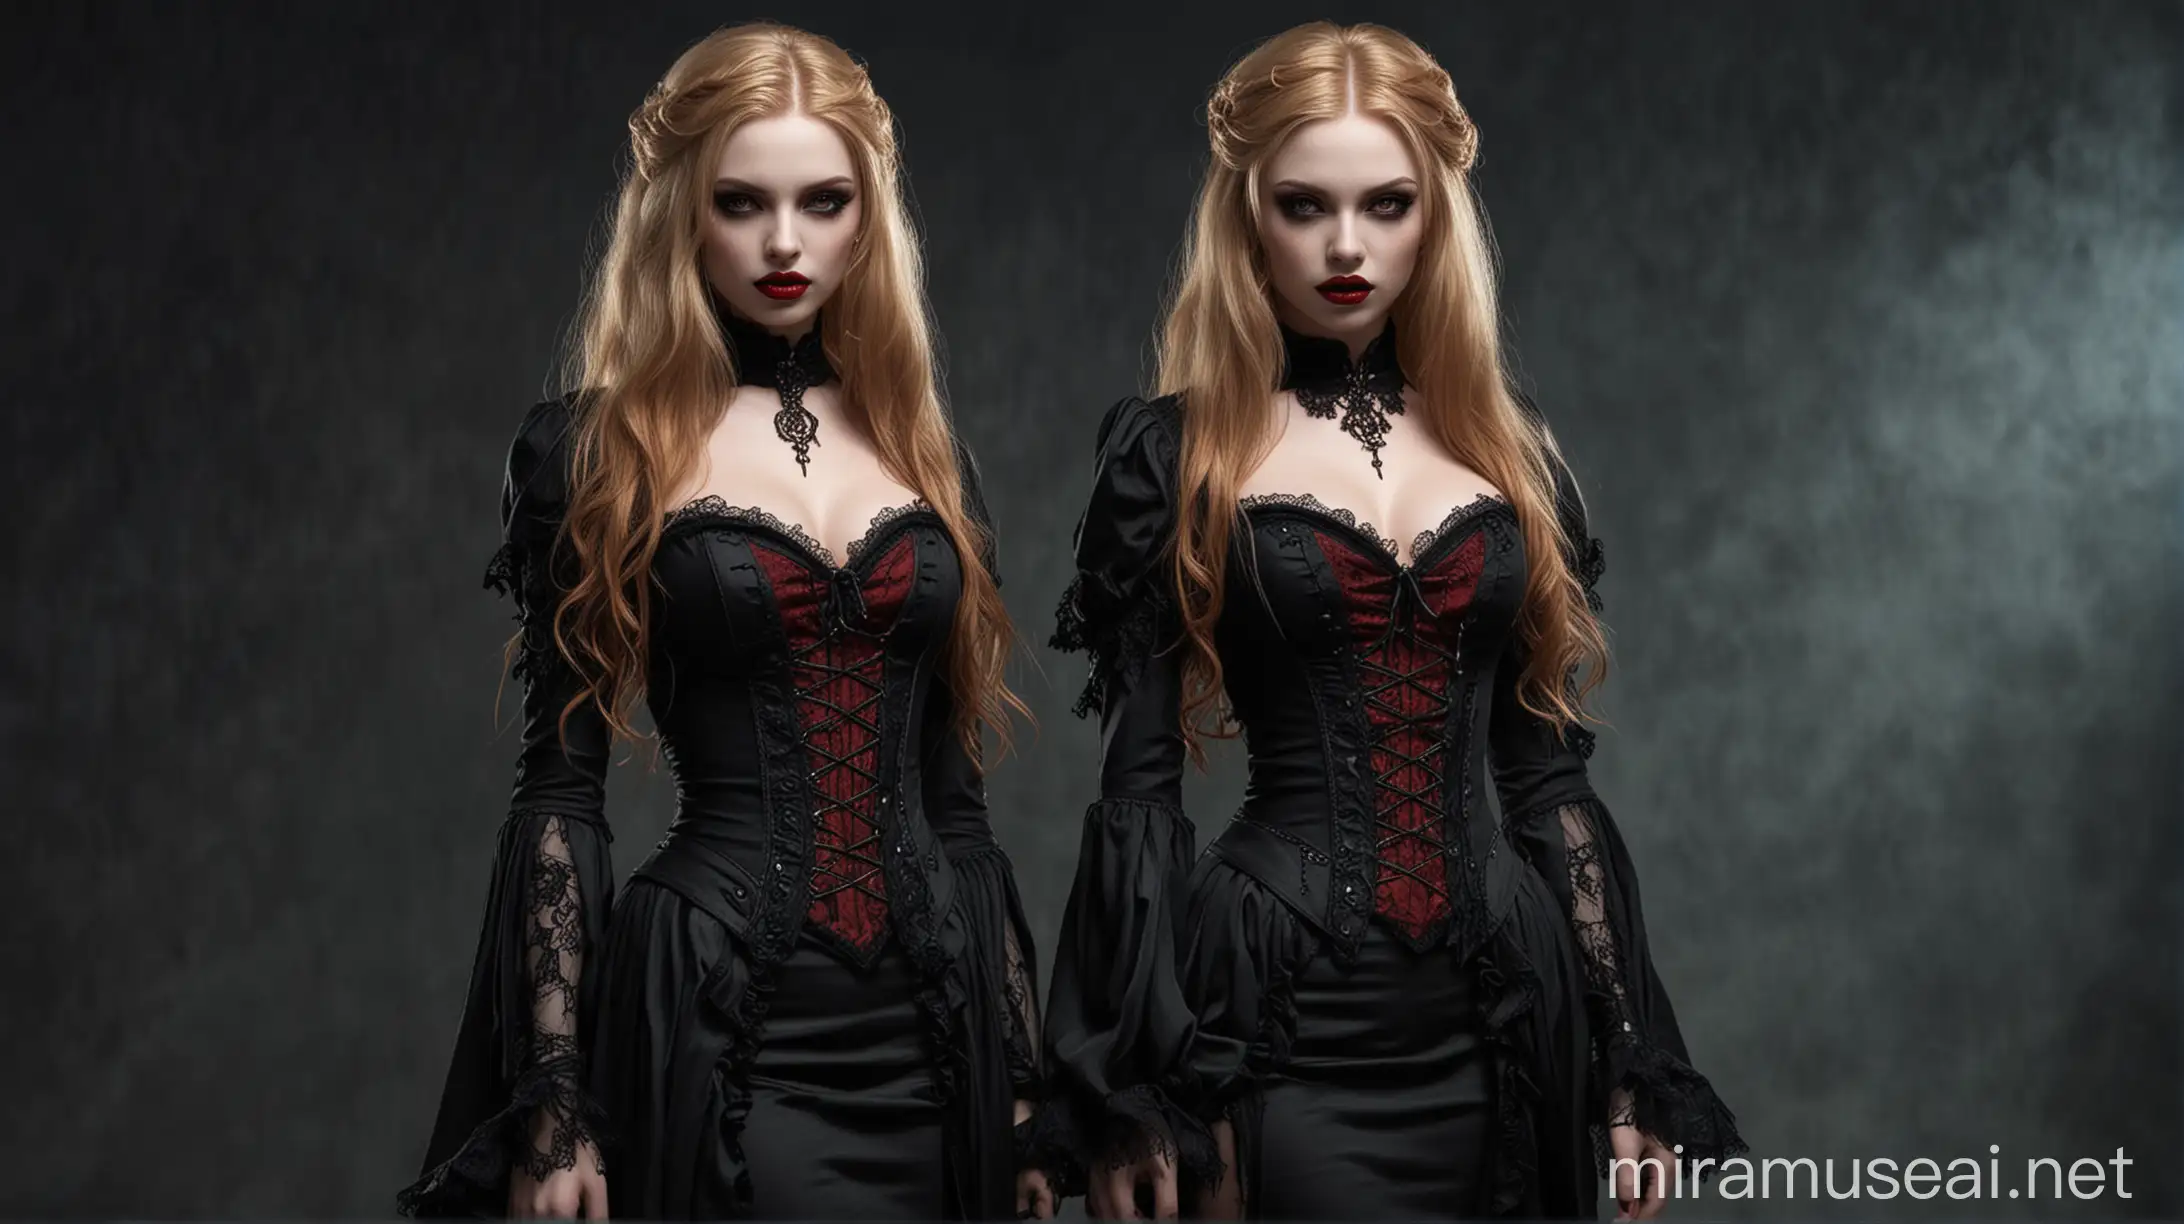 Sultry Gothic Vampire Woman in Elegant Dark Attire and Cherry Blonde Hair